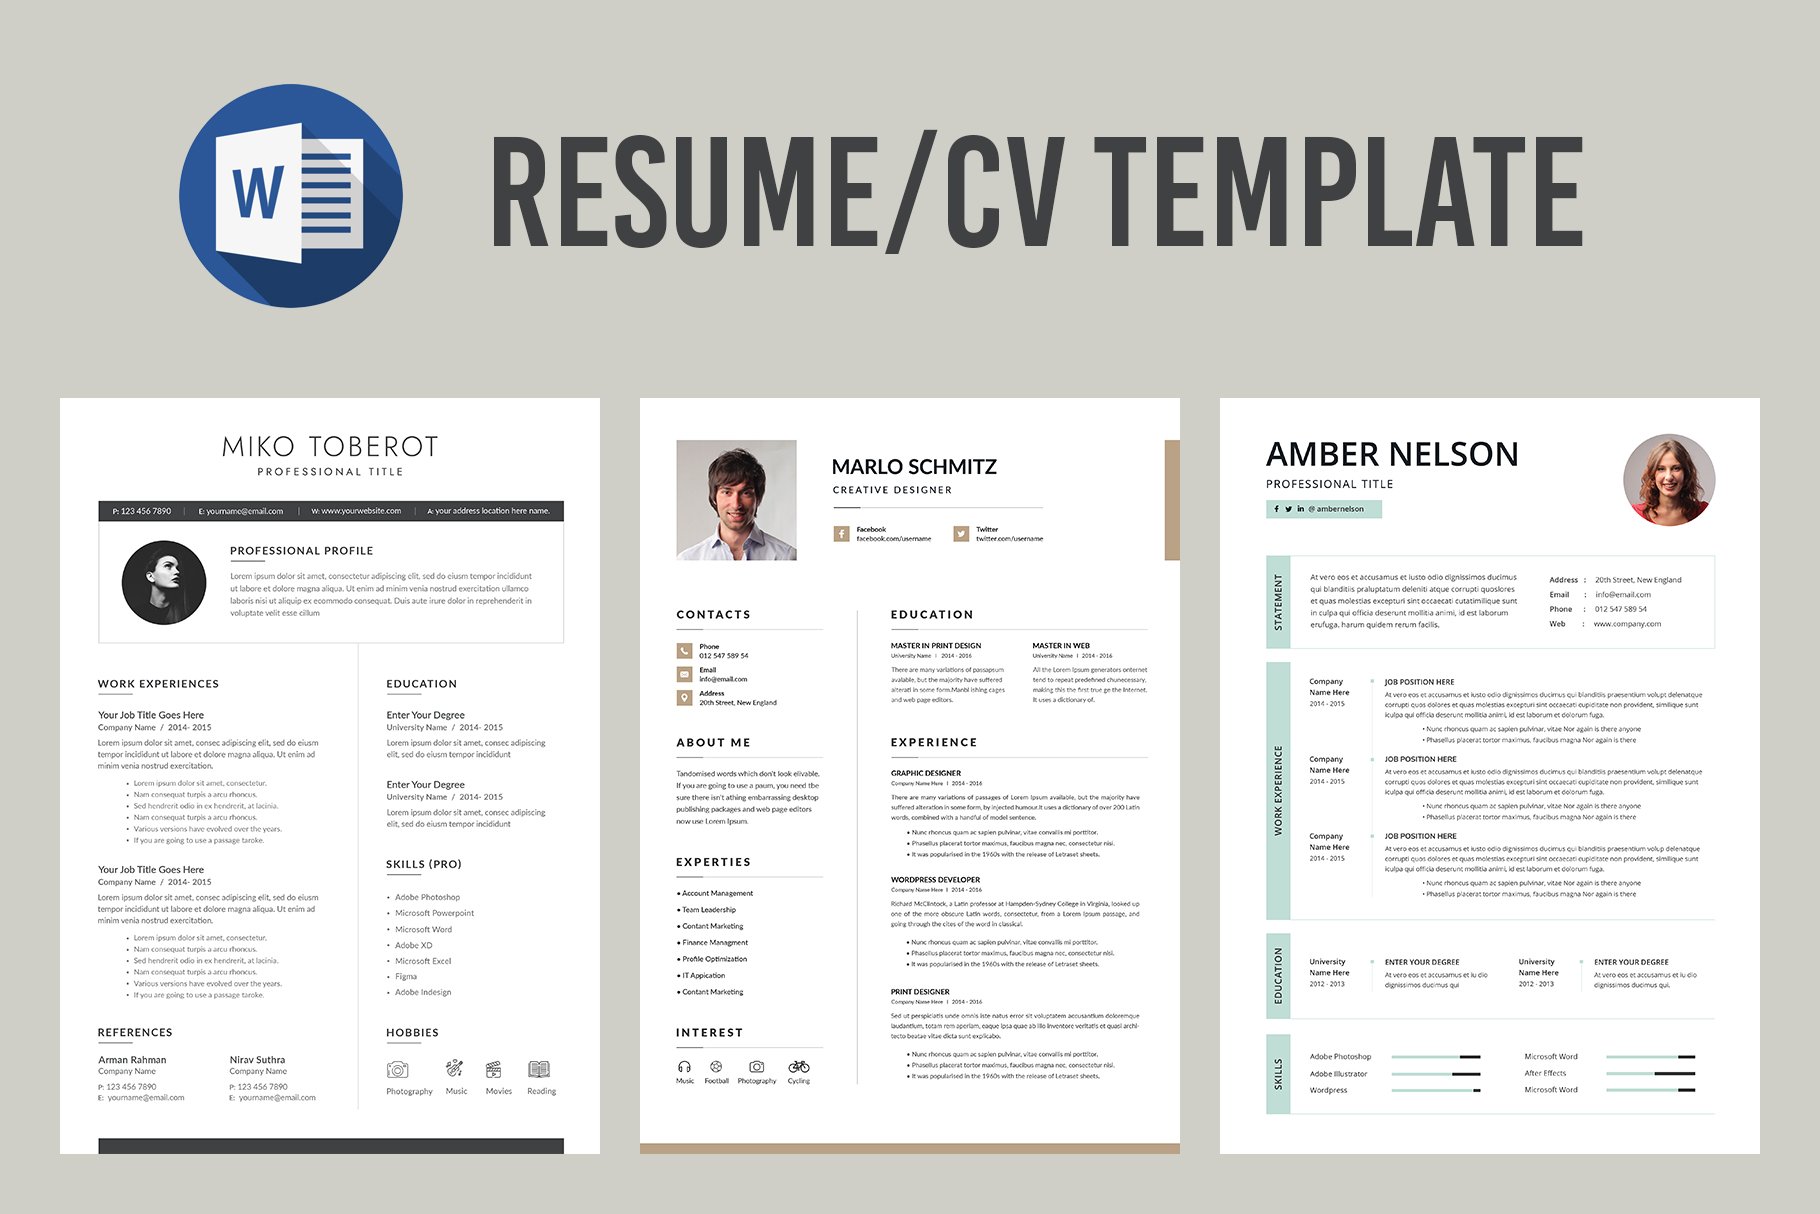 Resume/CV Bundle | 6 Resume for $14 preview image.